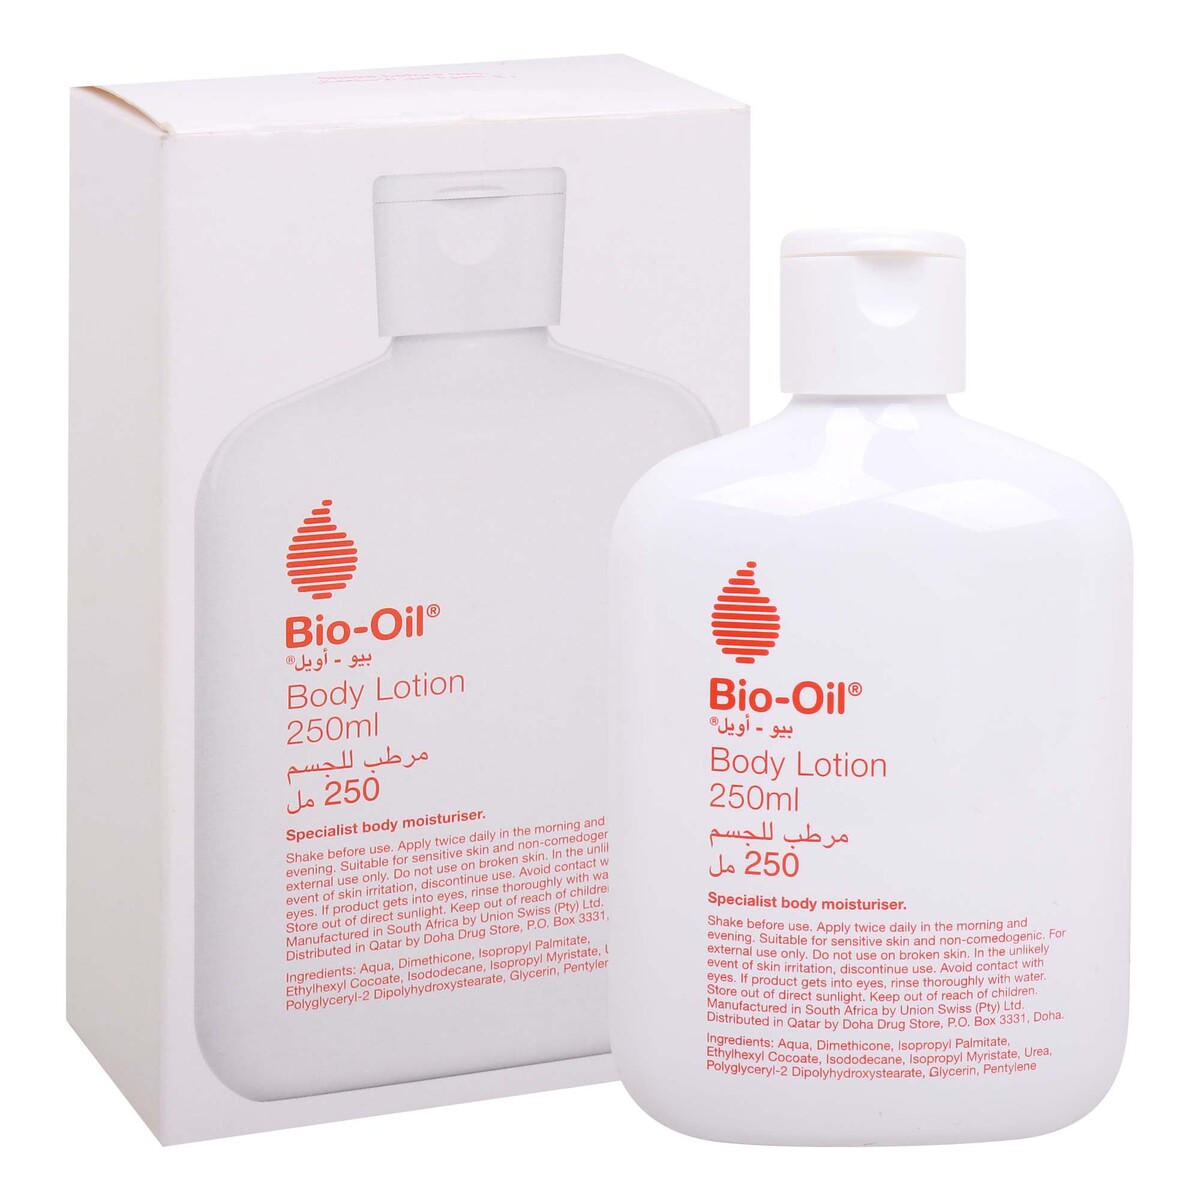 Bio-Oil Body Lotion, Specialist Body Moisturiser, 250 ml